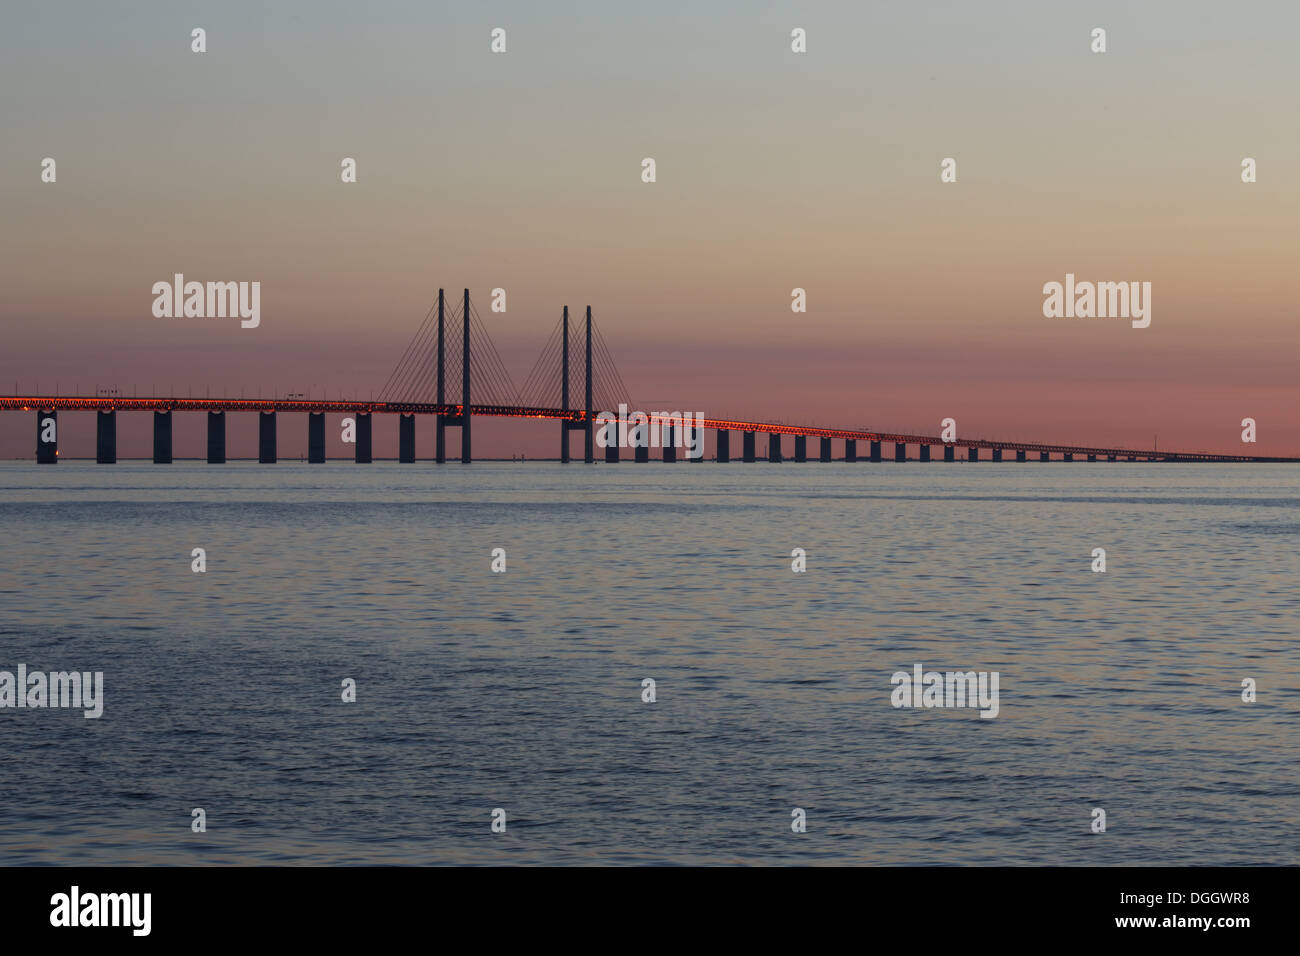 Øresund bridge - Malmo Sweden Stock Photo